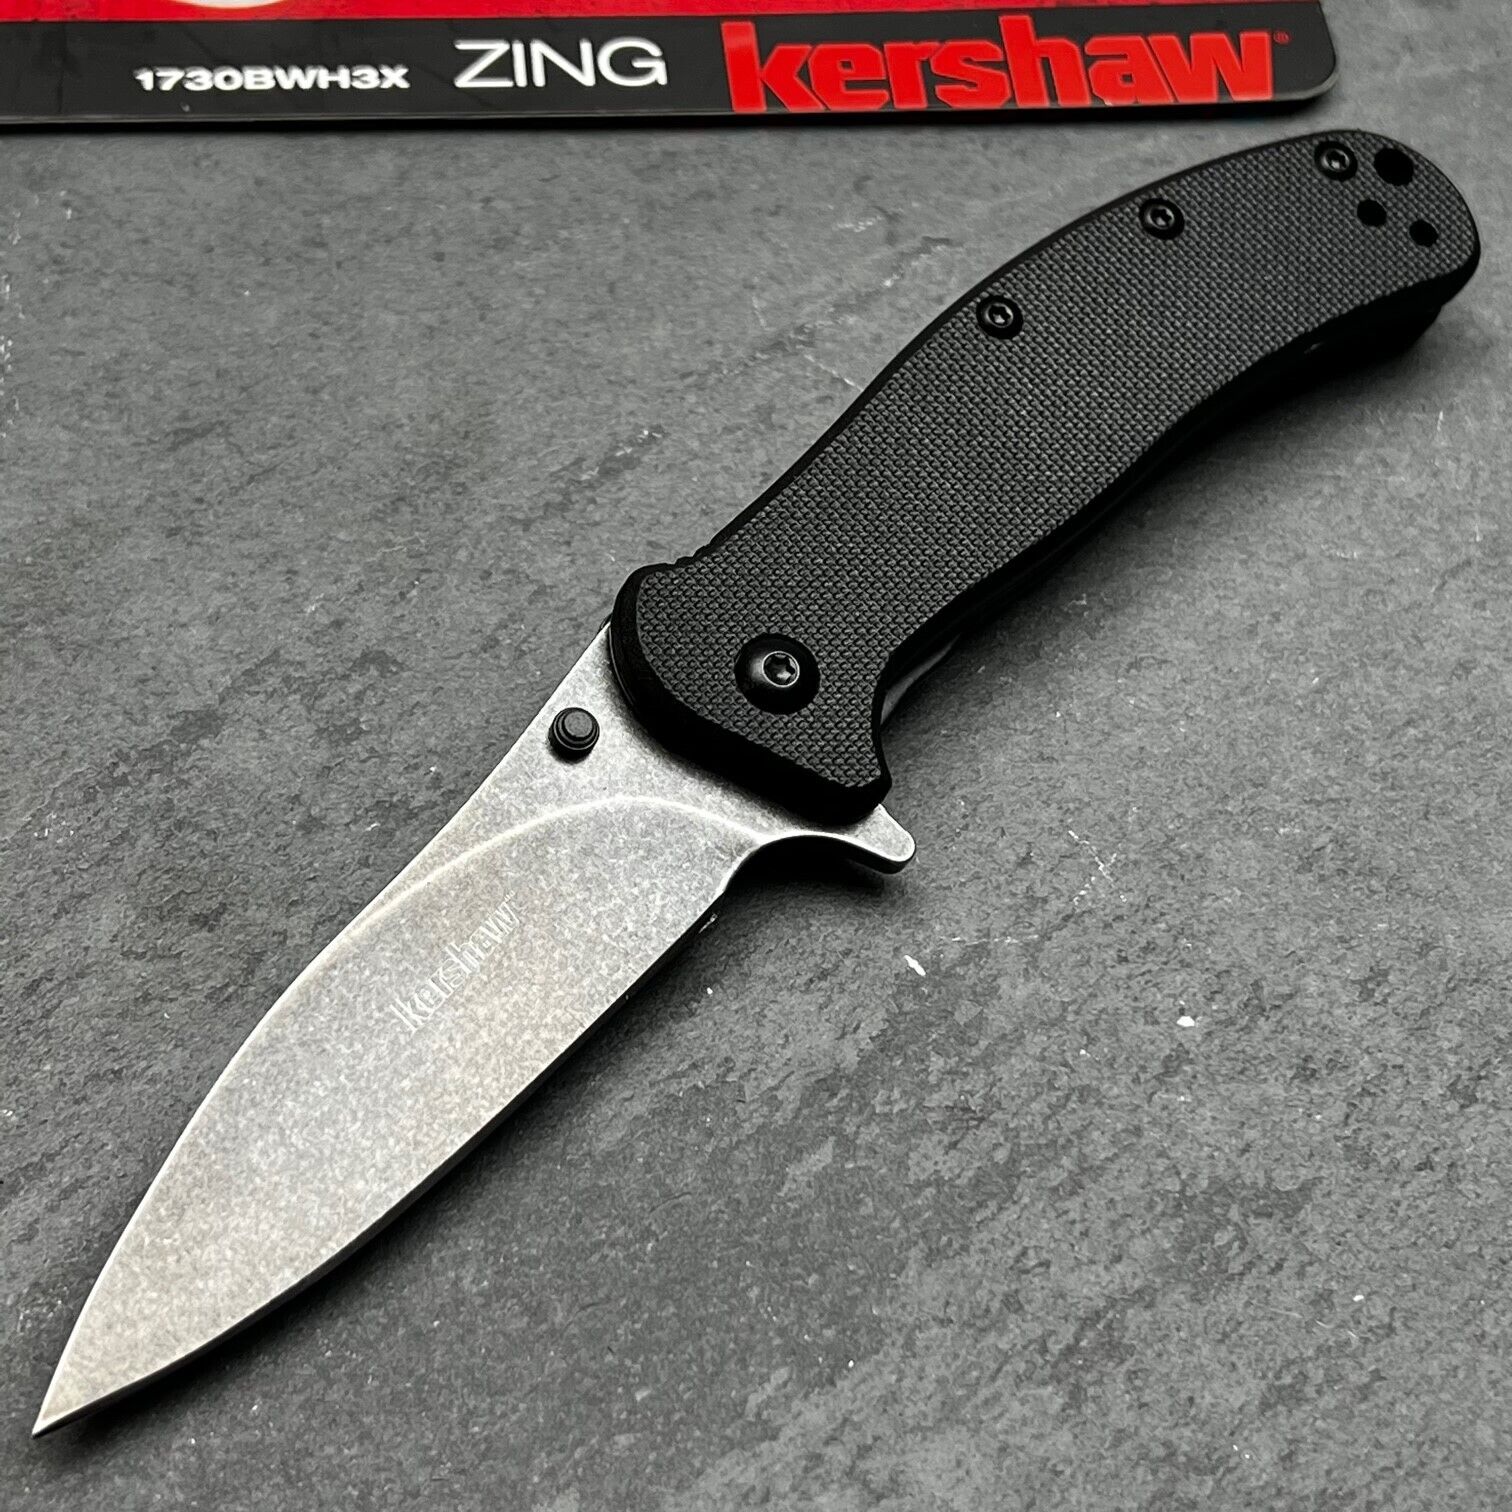 KERSHAW Zing Black G10 Spring Assisted Opening EDC Folding Blade Pocket Knife